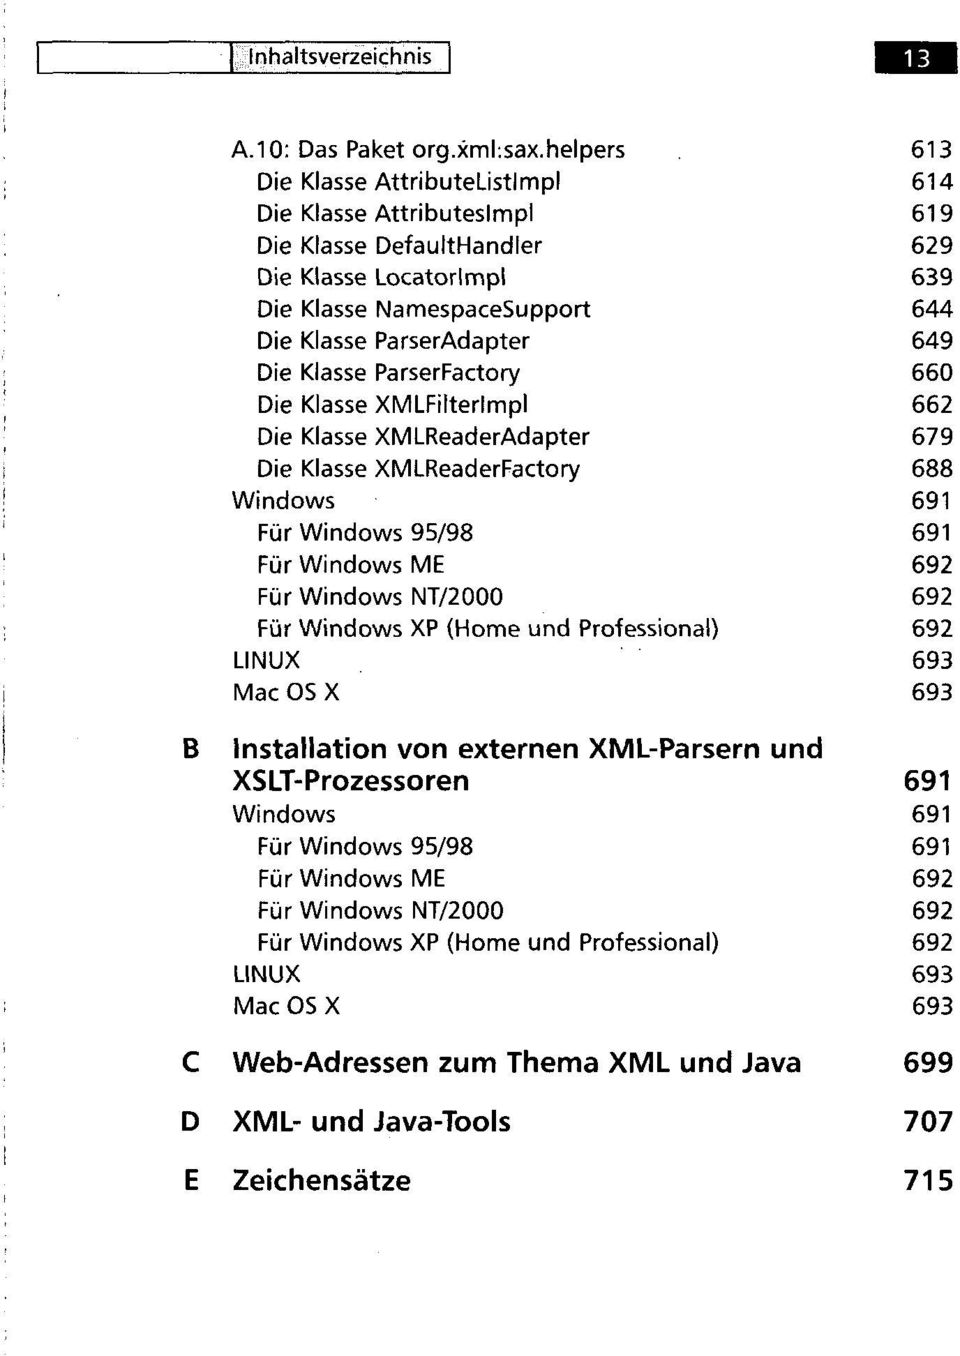 Klasse XMLFilterlmpl Die Klasse XMLReaderAdapter Die Klasse XMLReaderFactory Windows Für Windows 95/98 Für Windows ME Für Windows NT/2000 Für Windows XP (Home und Professional) LINUX Mac OS X